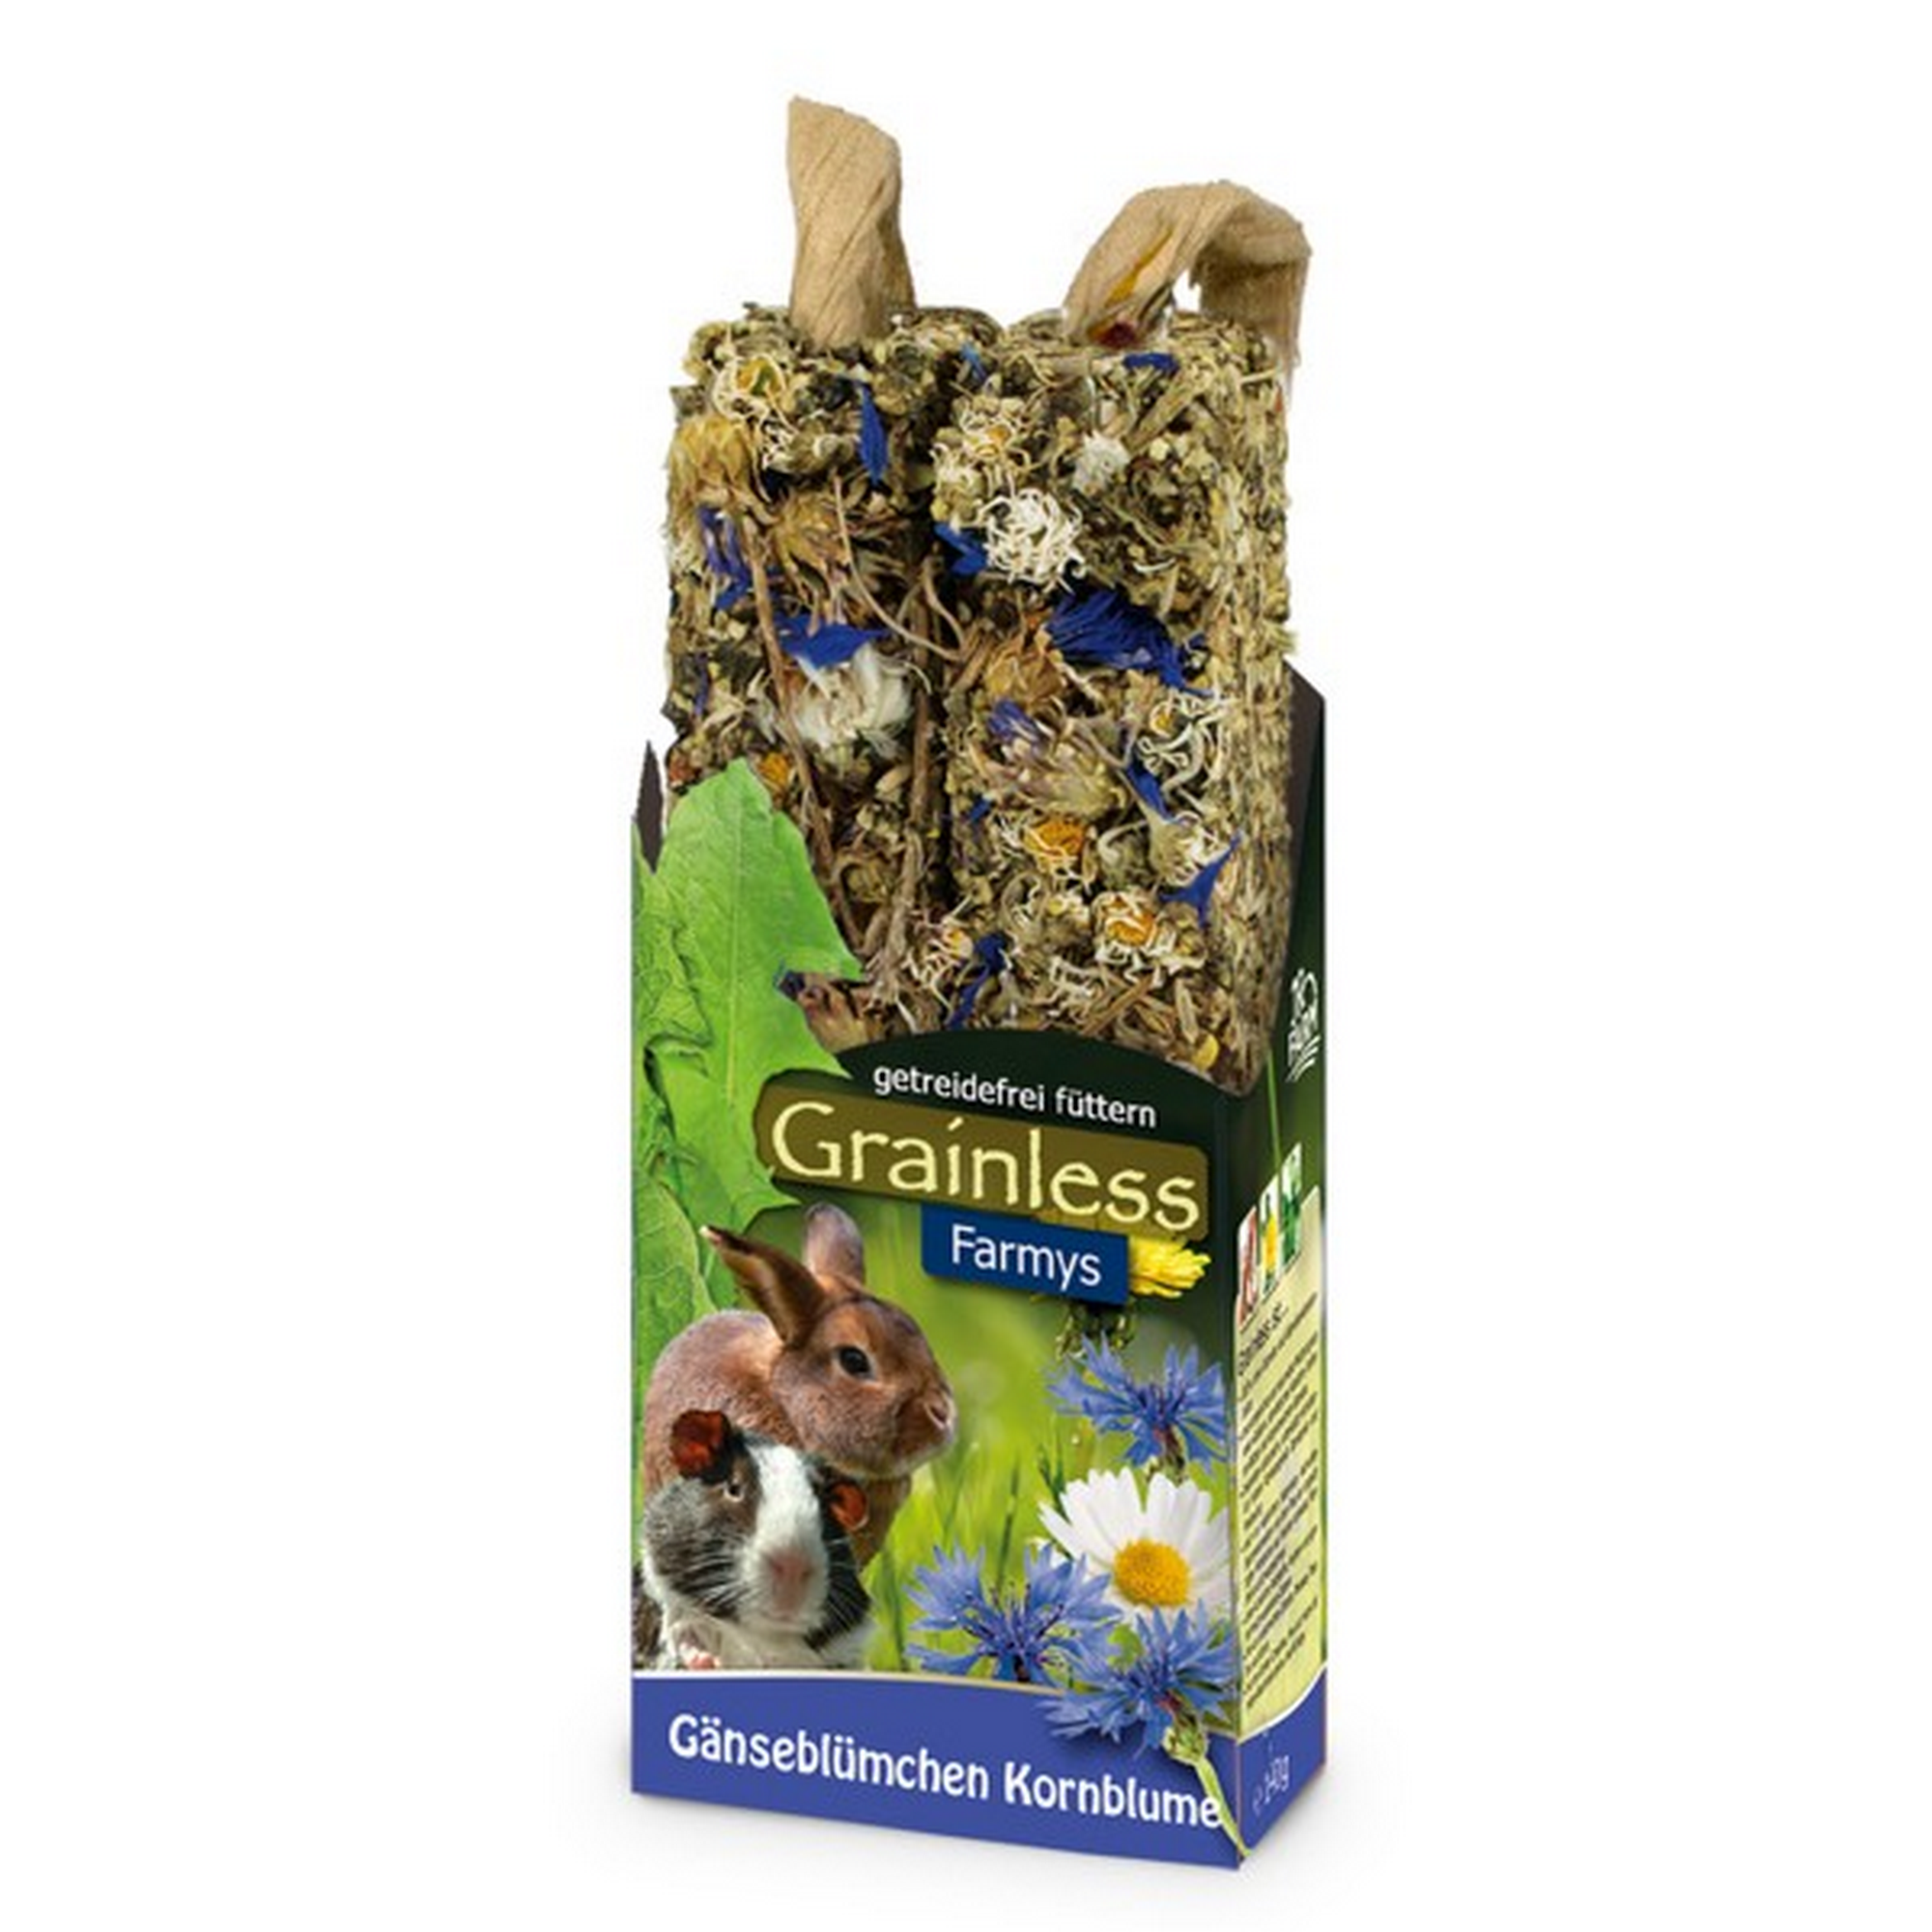 Nagersnack 'Grainless Farmys' Gänseblümchen-Kornblume 140 g + product picture